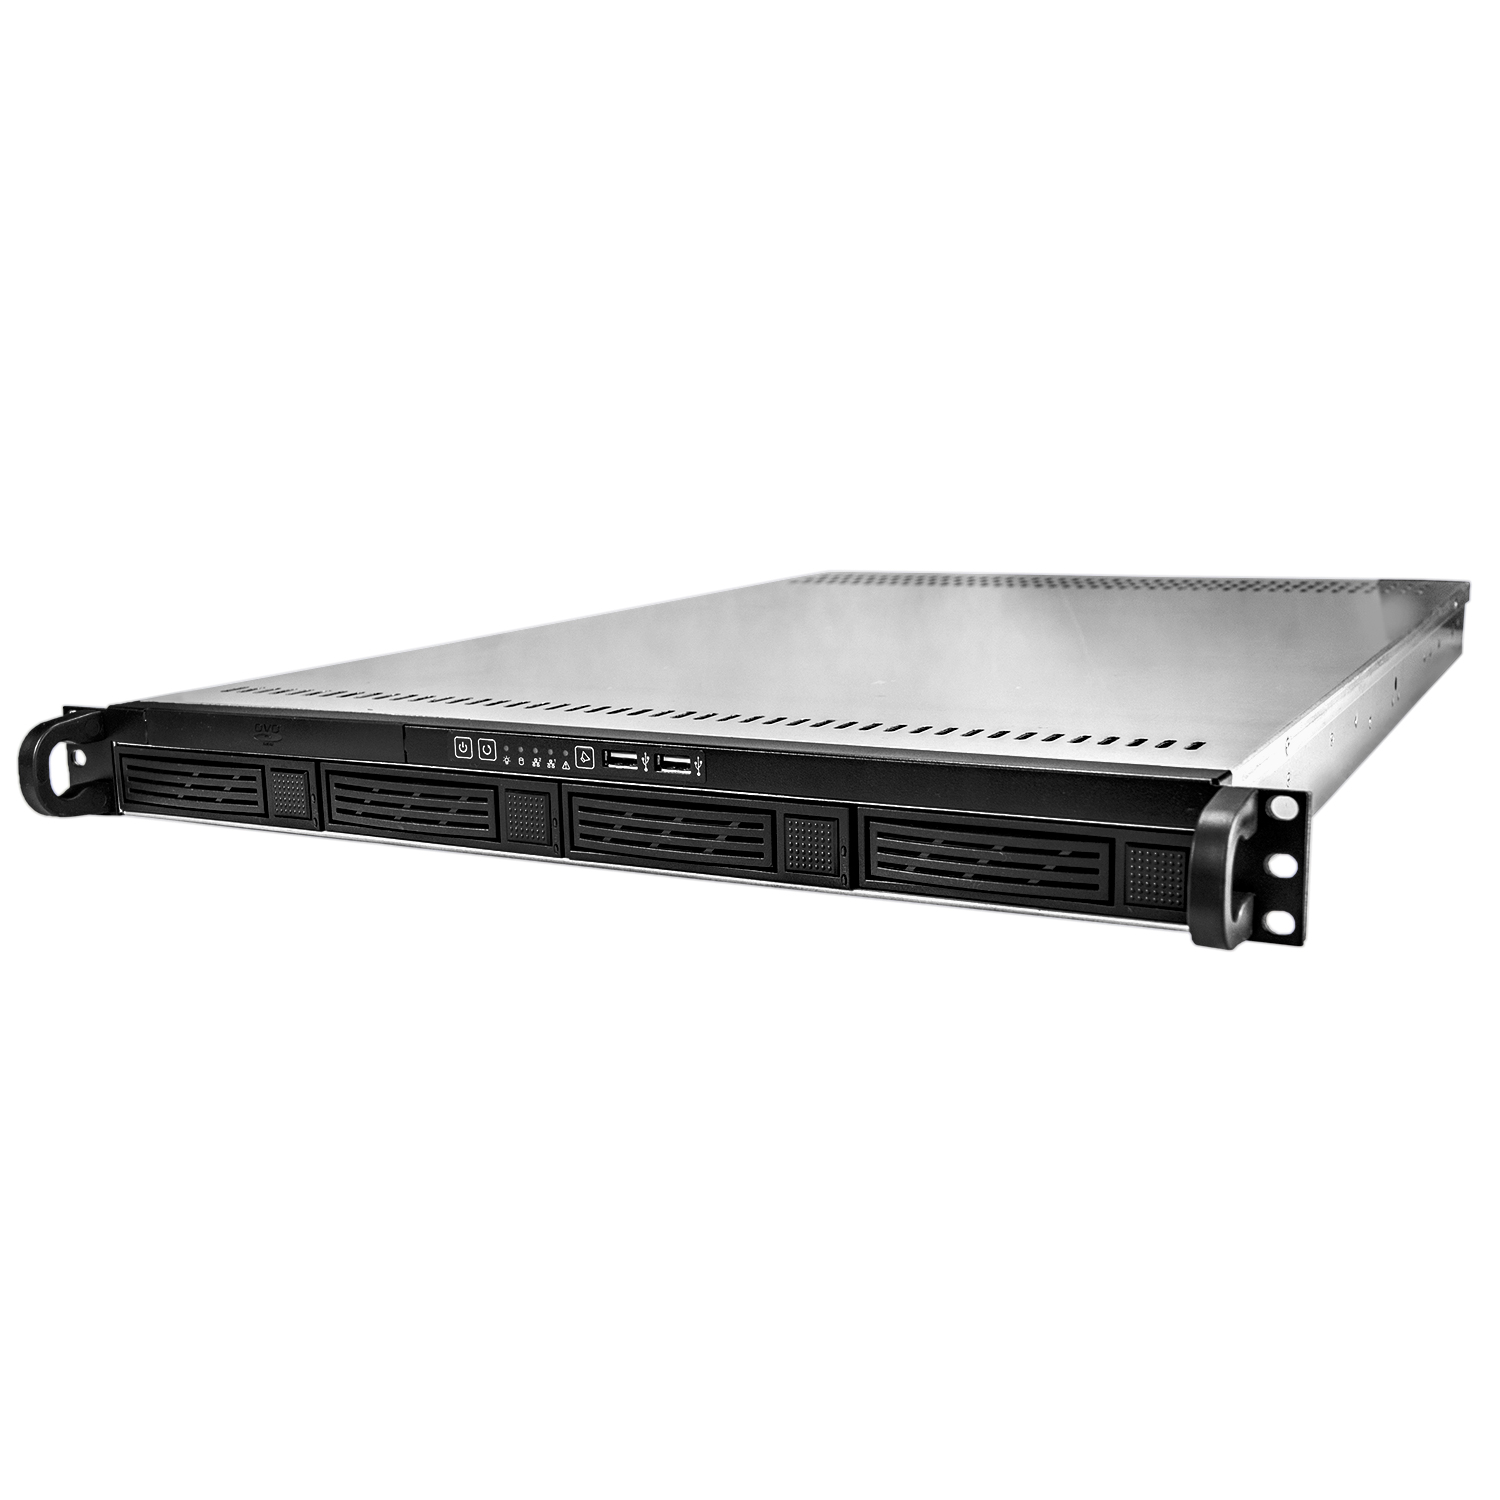 Серверный корпус 1U NR-R1004 2x400Вт 4xHot Swap SAS/SATA (ATX 10"x12", 2x2.5" int, Slim CD, 550mm) 